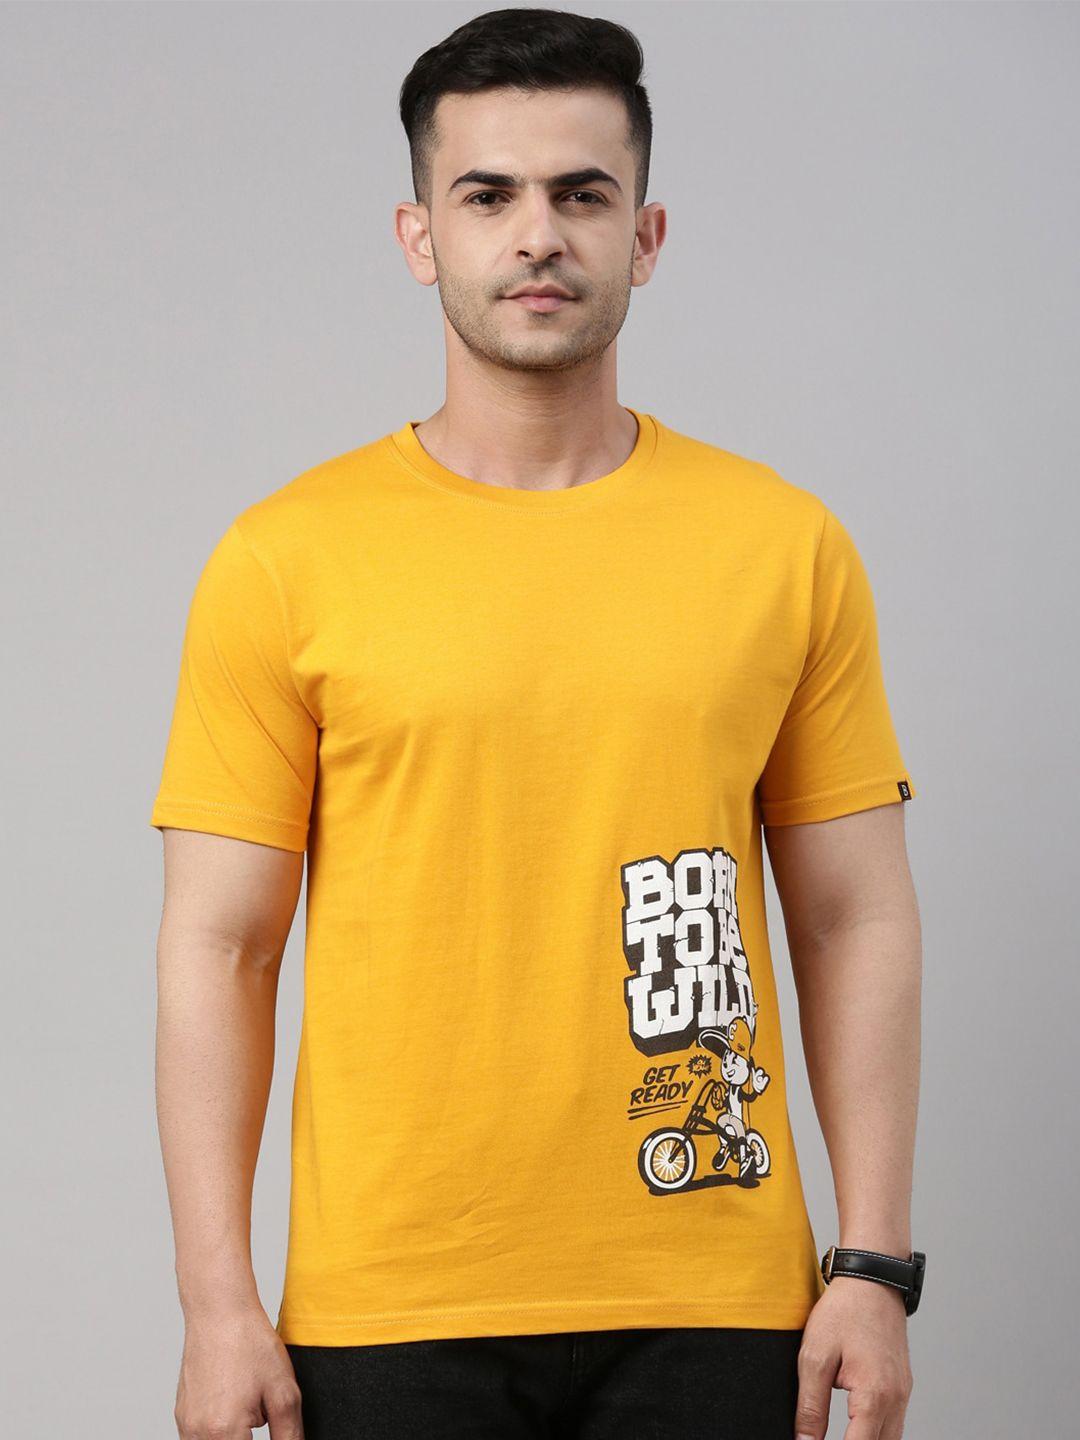 bushirt men mustard yellow printed pure cotton t-shirt